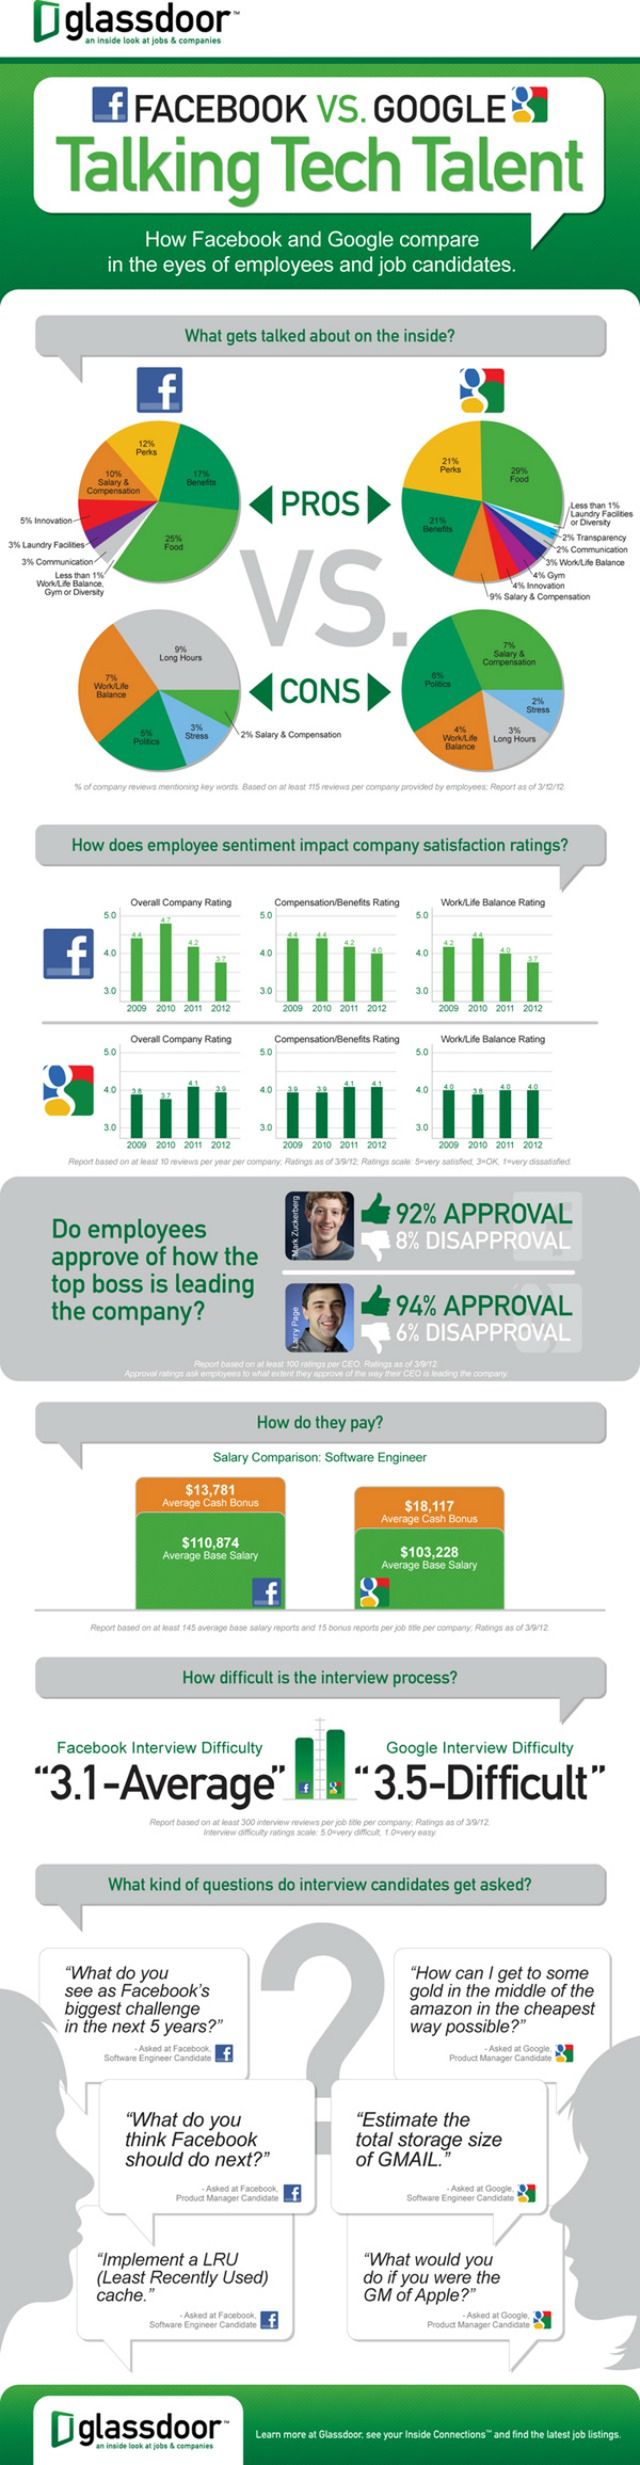 Jak pracownicy oceniają Google'a i Facebooka? (Fot. Mashable.com/Glassdoor)